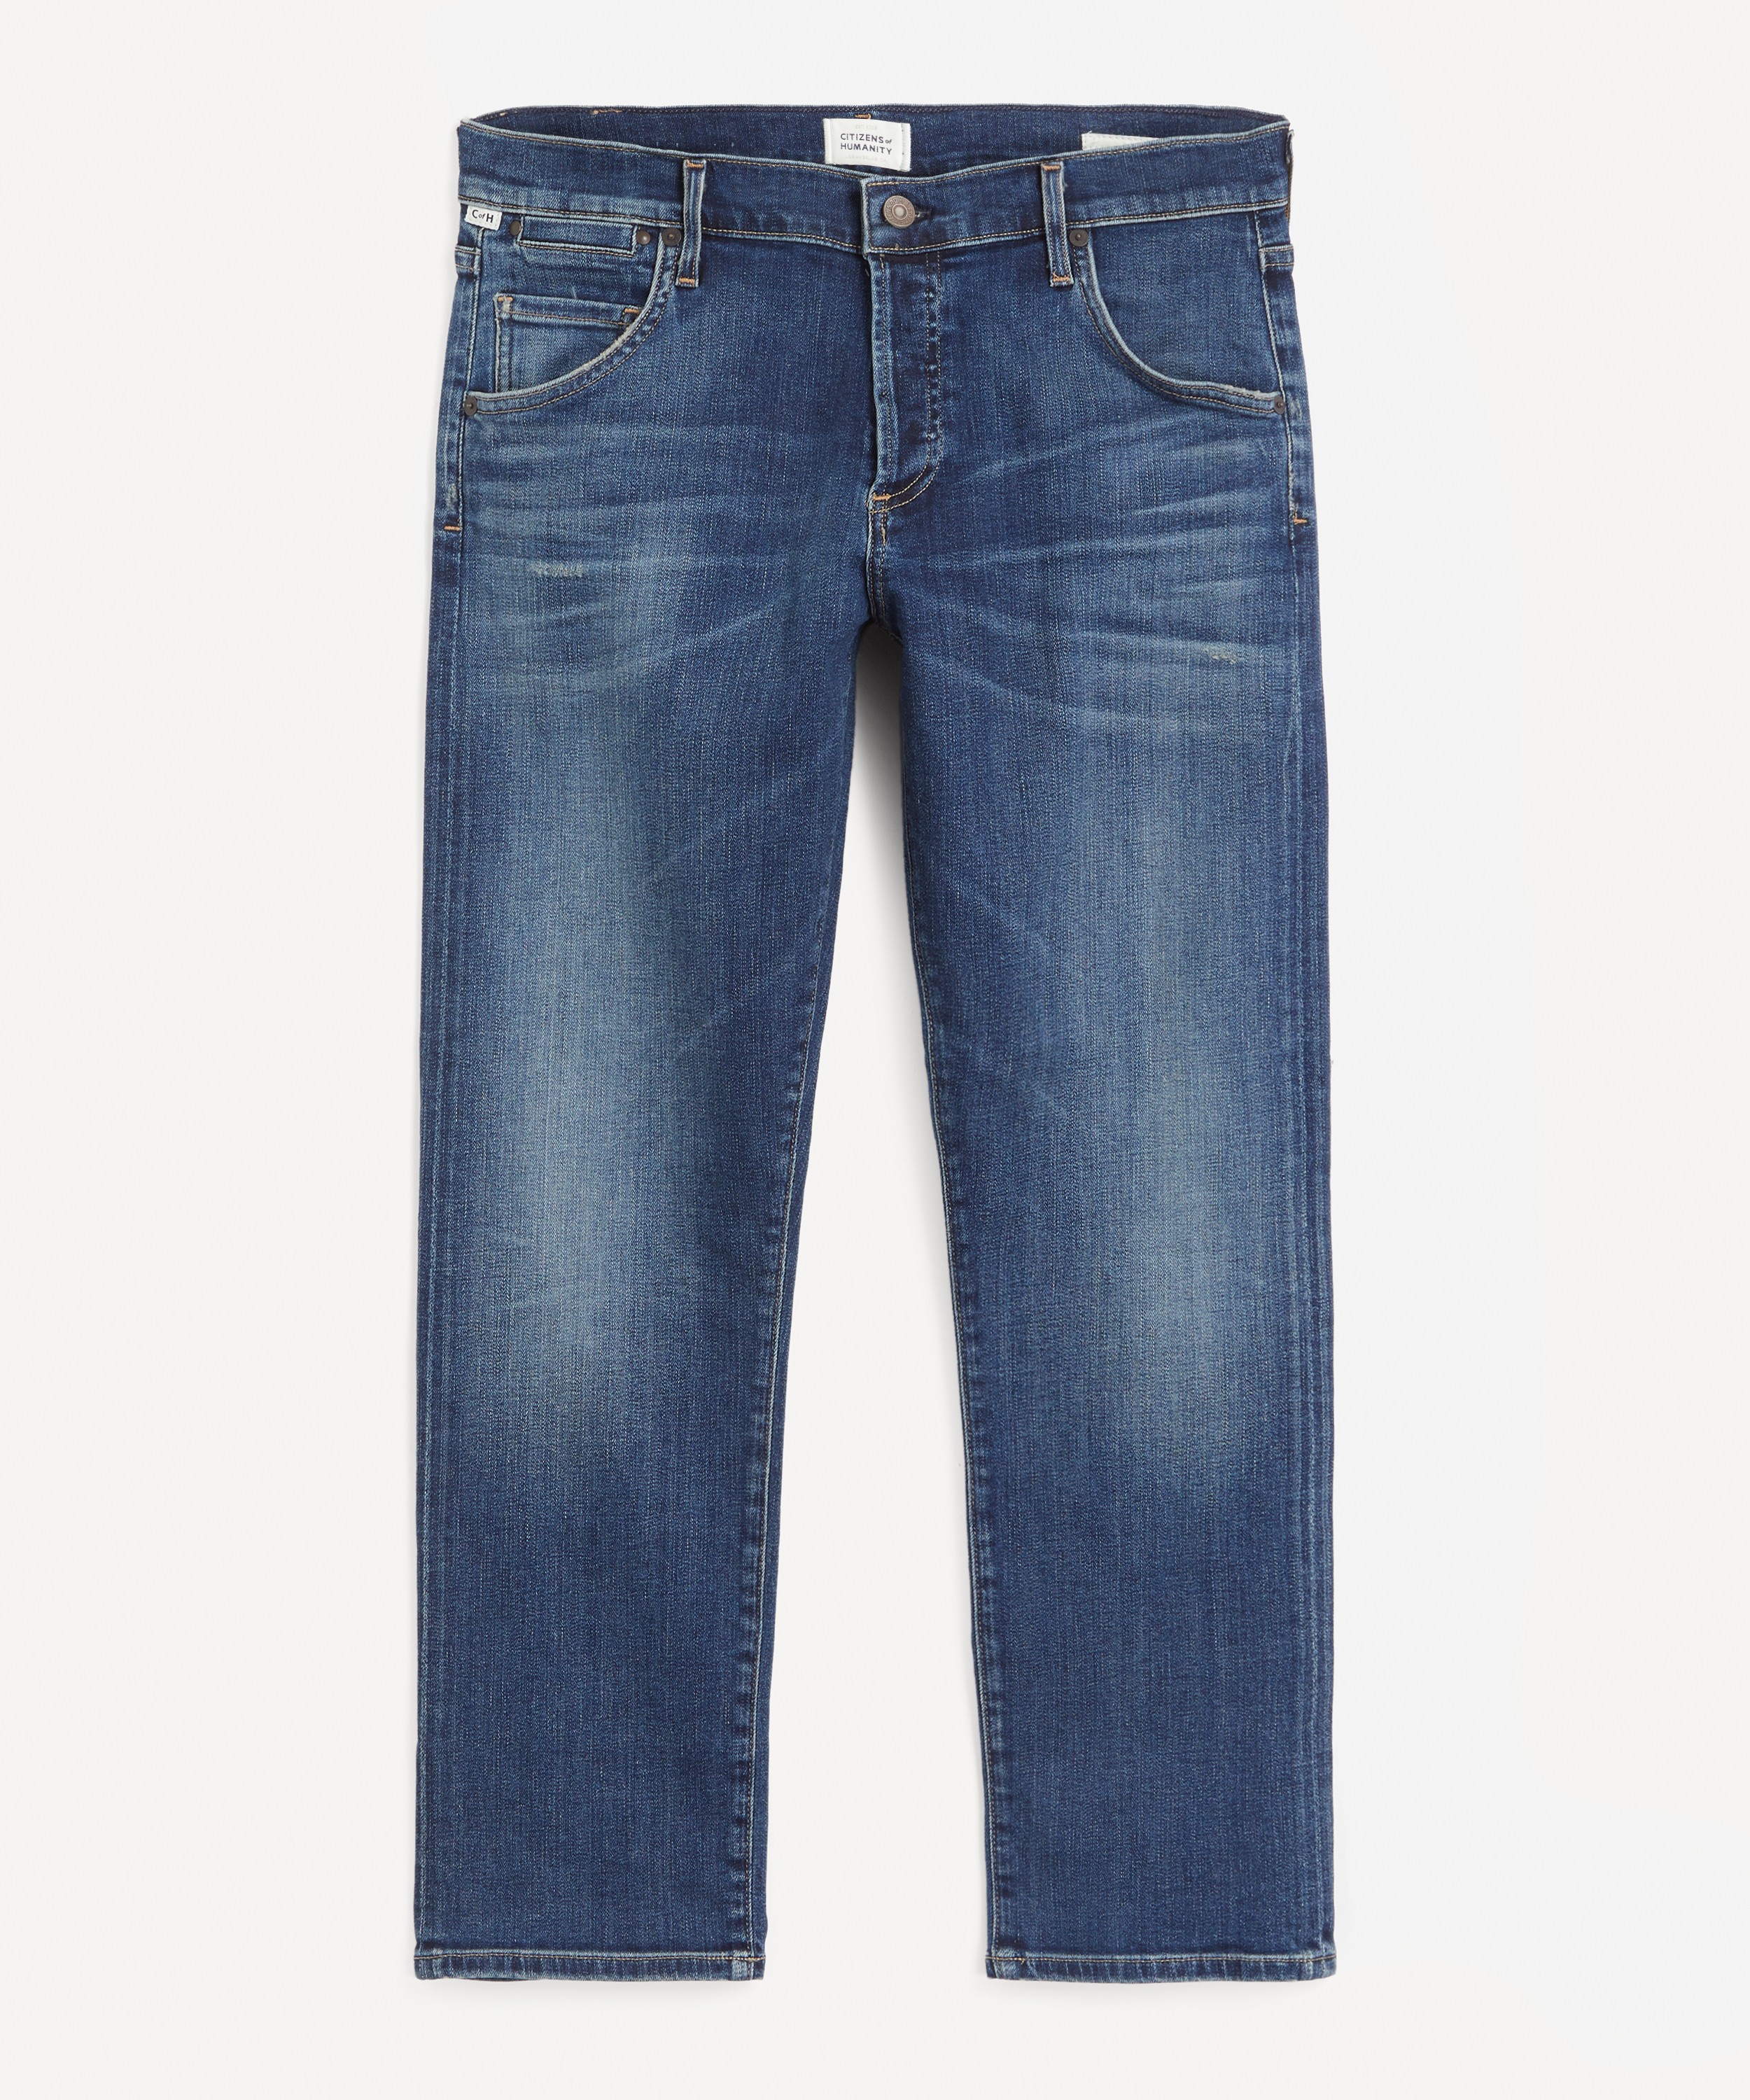 Christopher Kane Denim Jeans with Multicolor Paint Detail Size 26